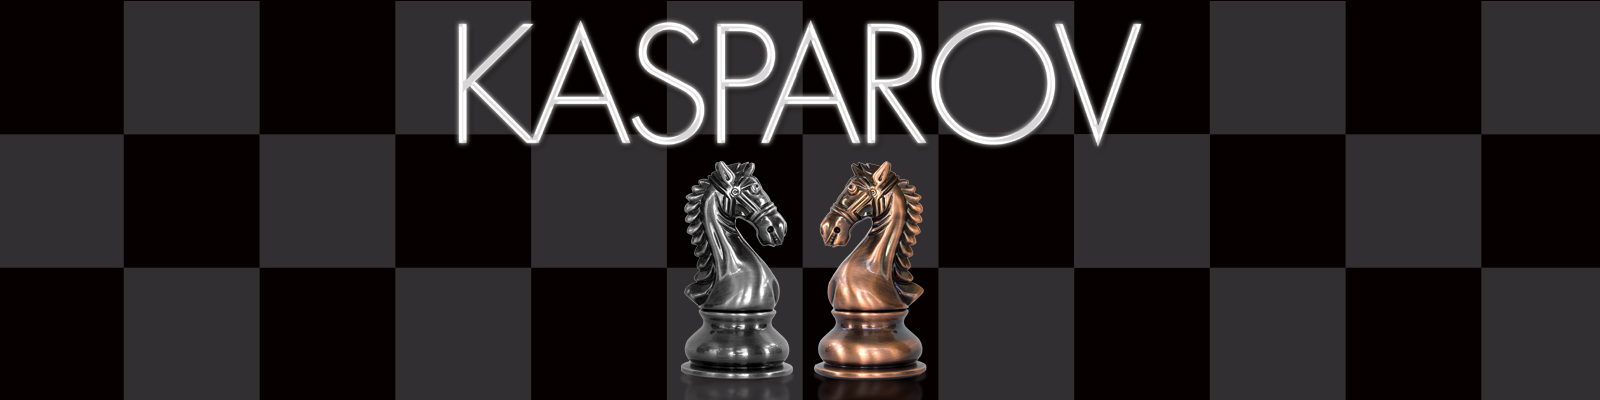 Ambassador Games Kasparov International Master Chess Set, MAGK002 at  Tractor Supply Co.